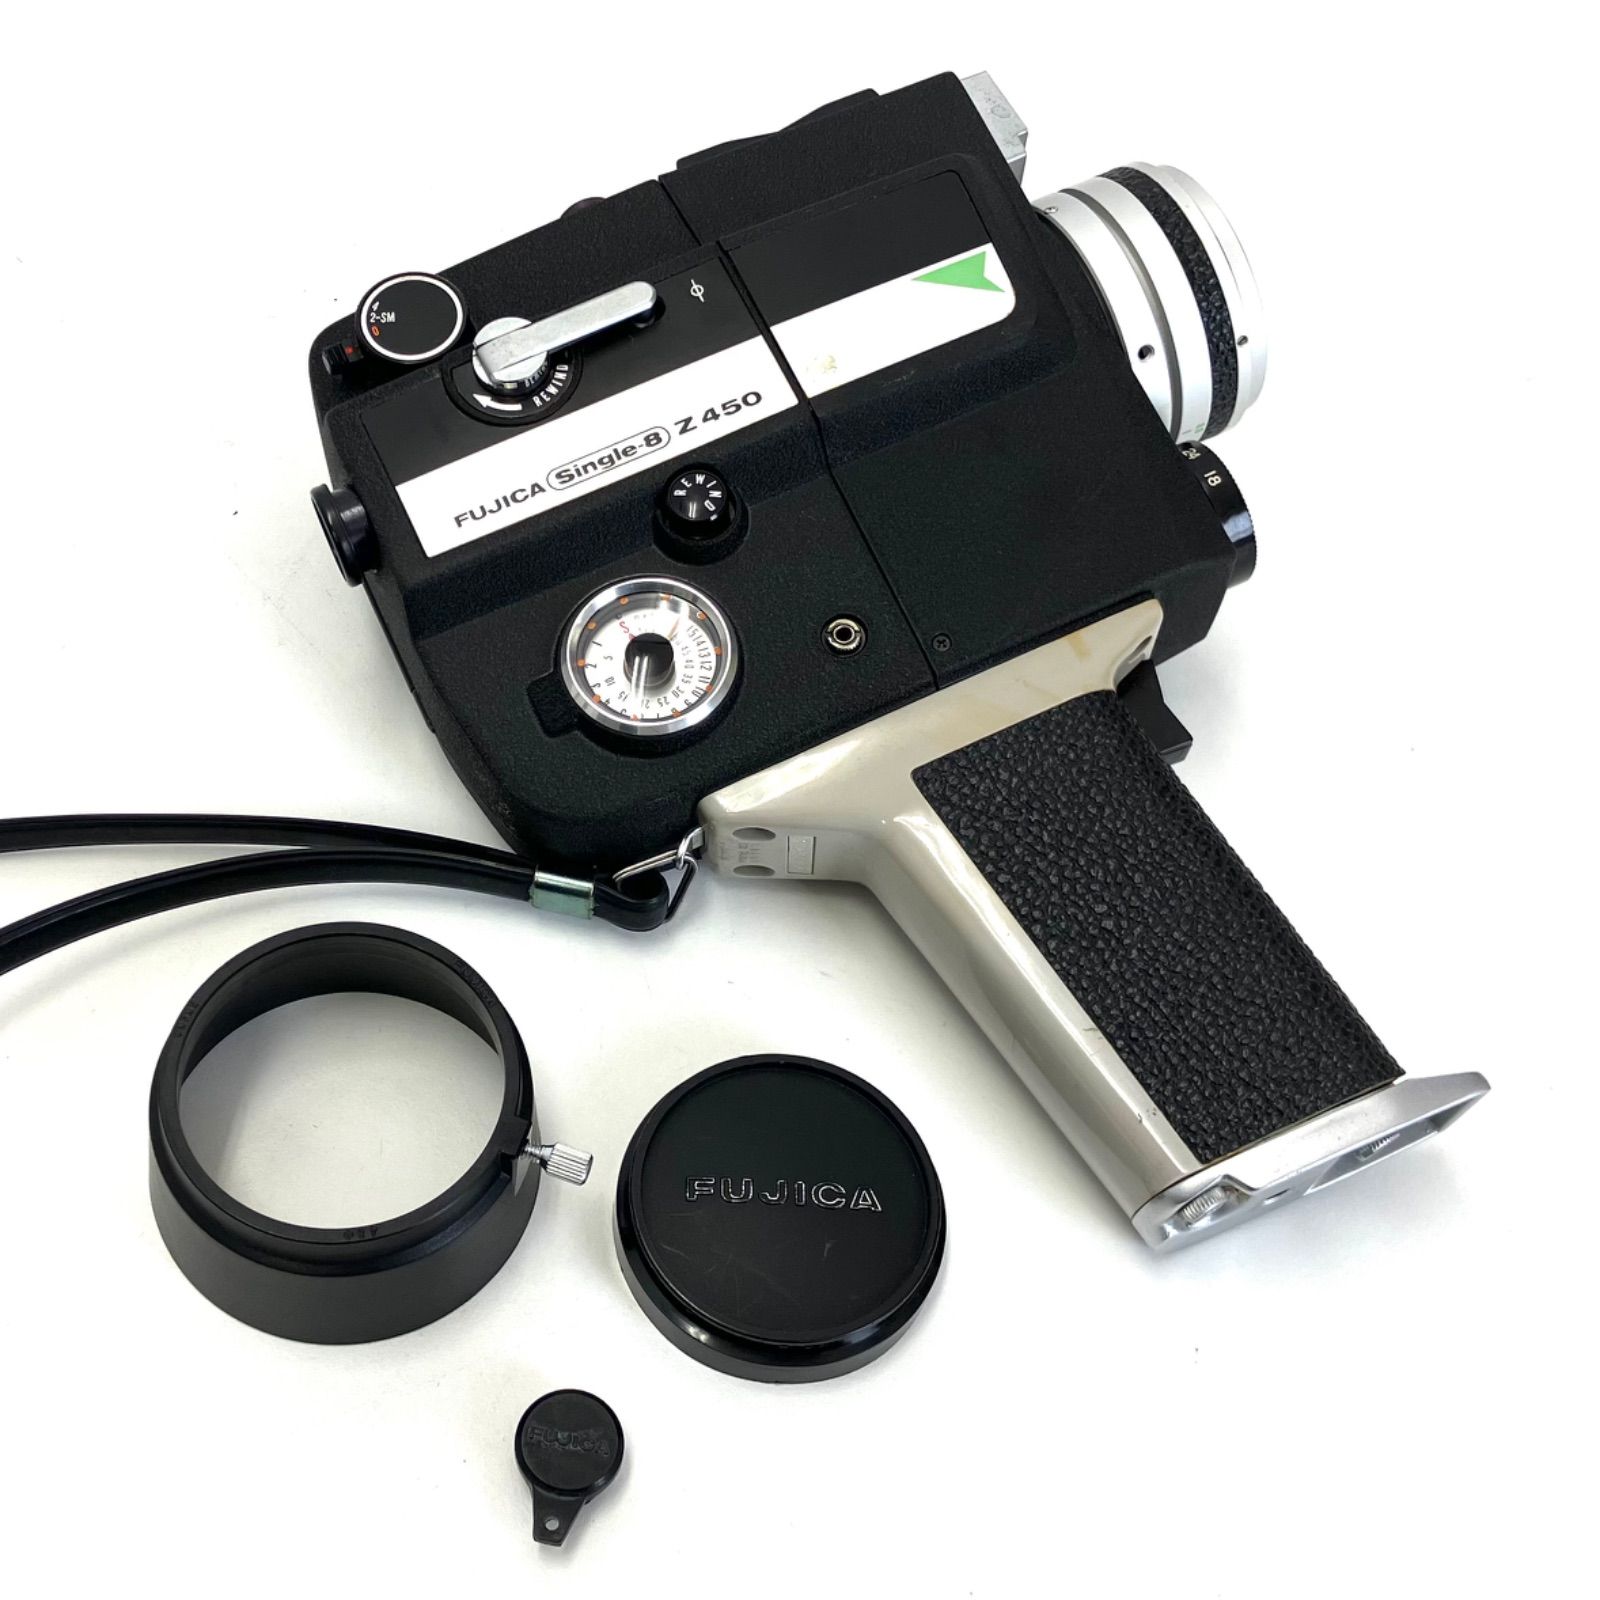 FUJICA Single.8 Z450 (ジャンク品) - ビデオカメラ